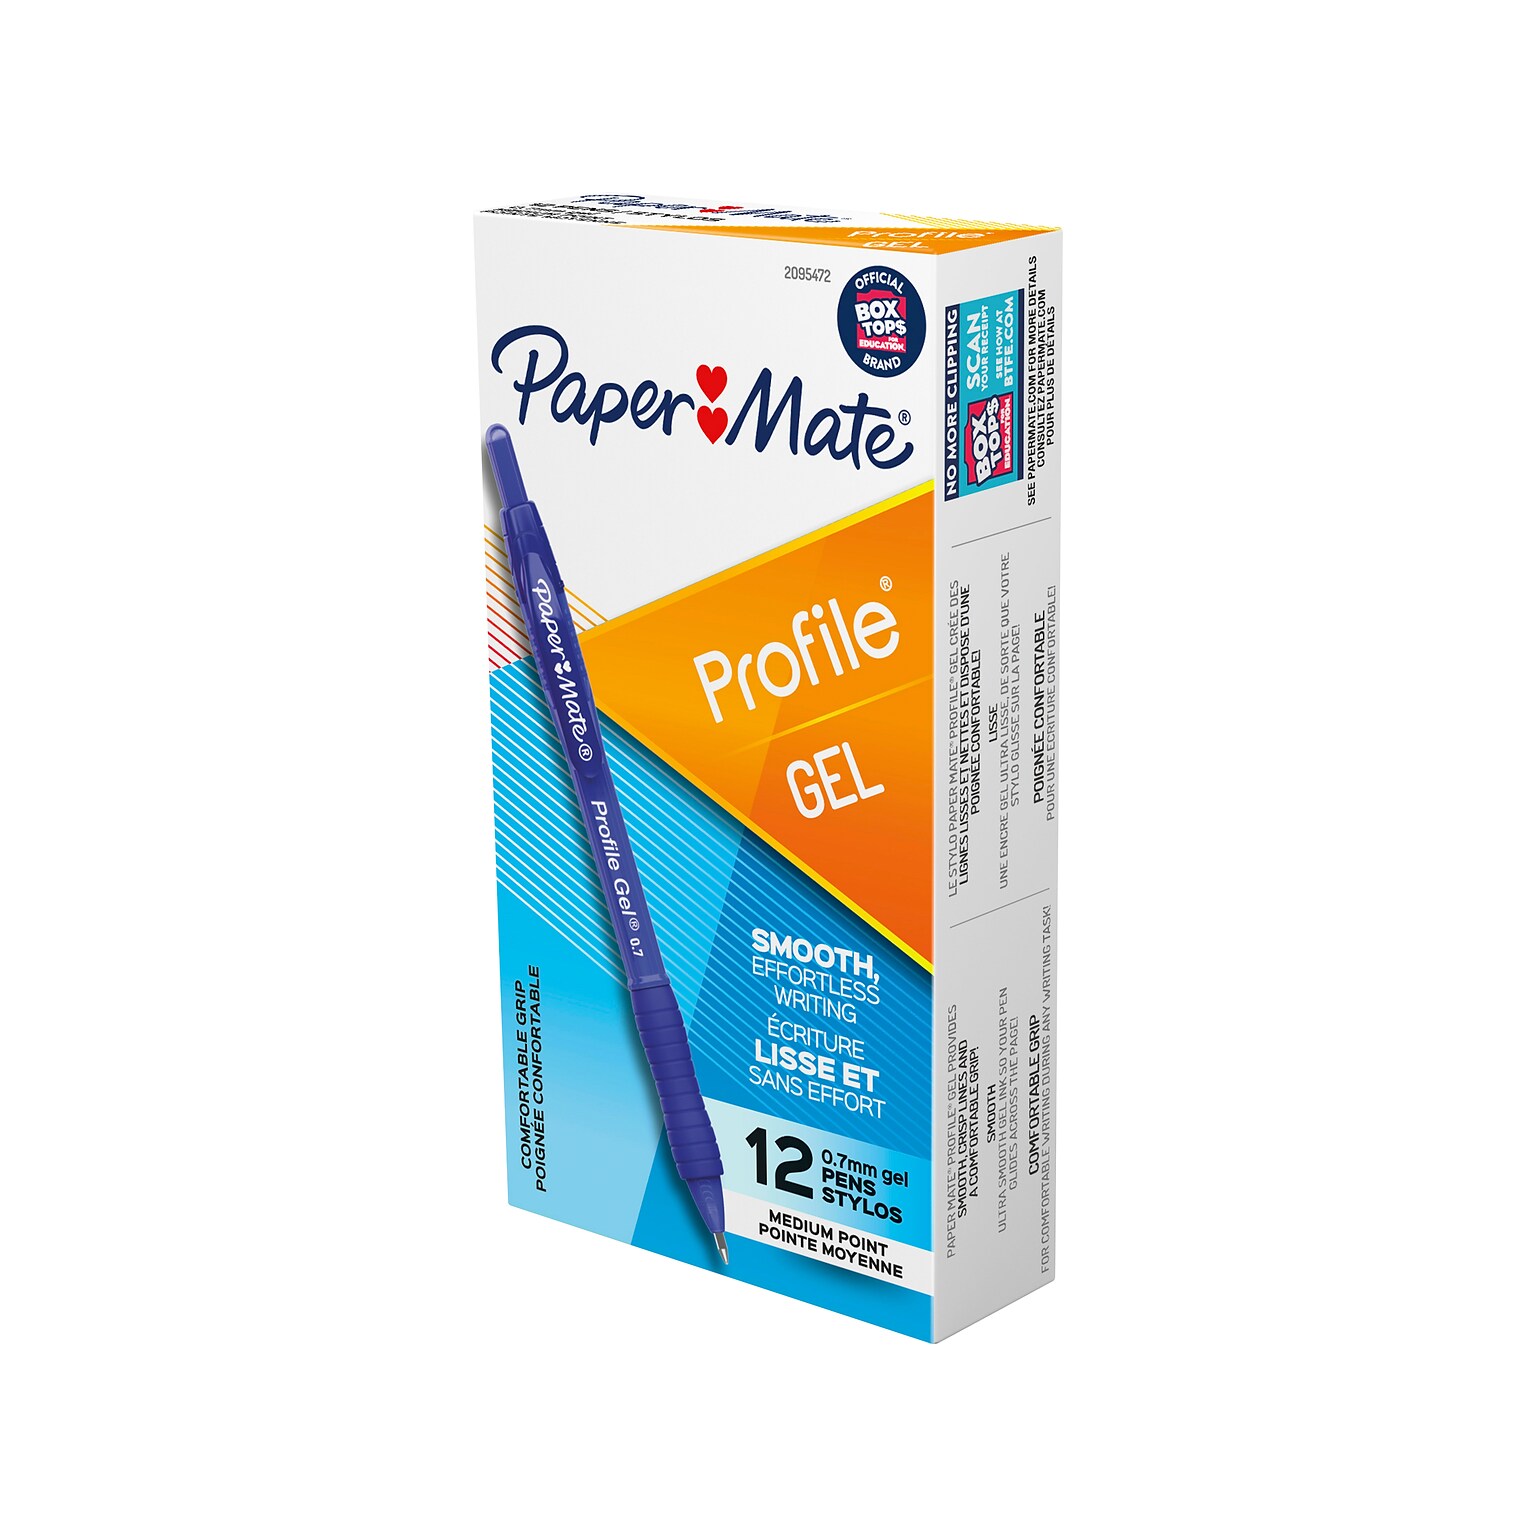 Paper Mate Profile Retractable Gel Pen, Medium Point, Blue Ink, Dozen (2095472)